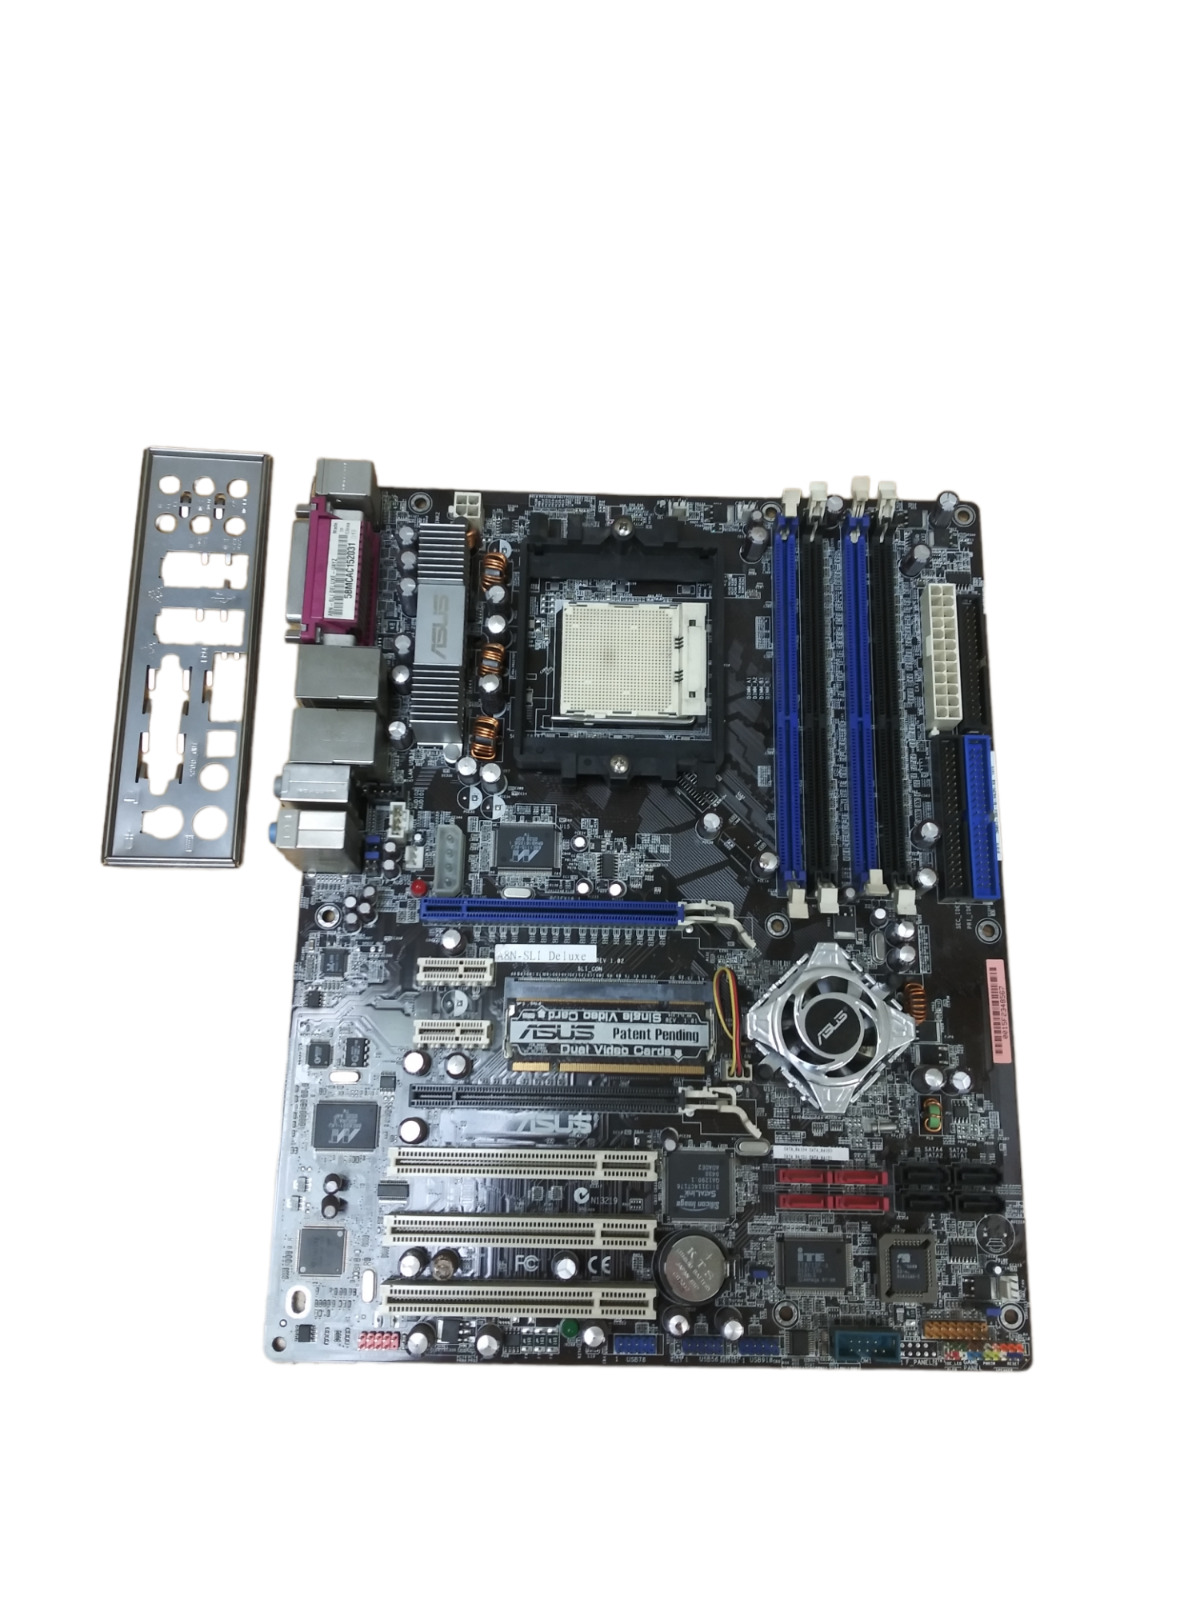 Asus A8N-SLI Deluxe Socket 939 Motherboard ATX DDR nForce4 SLI Athlon 64 tested